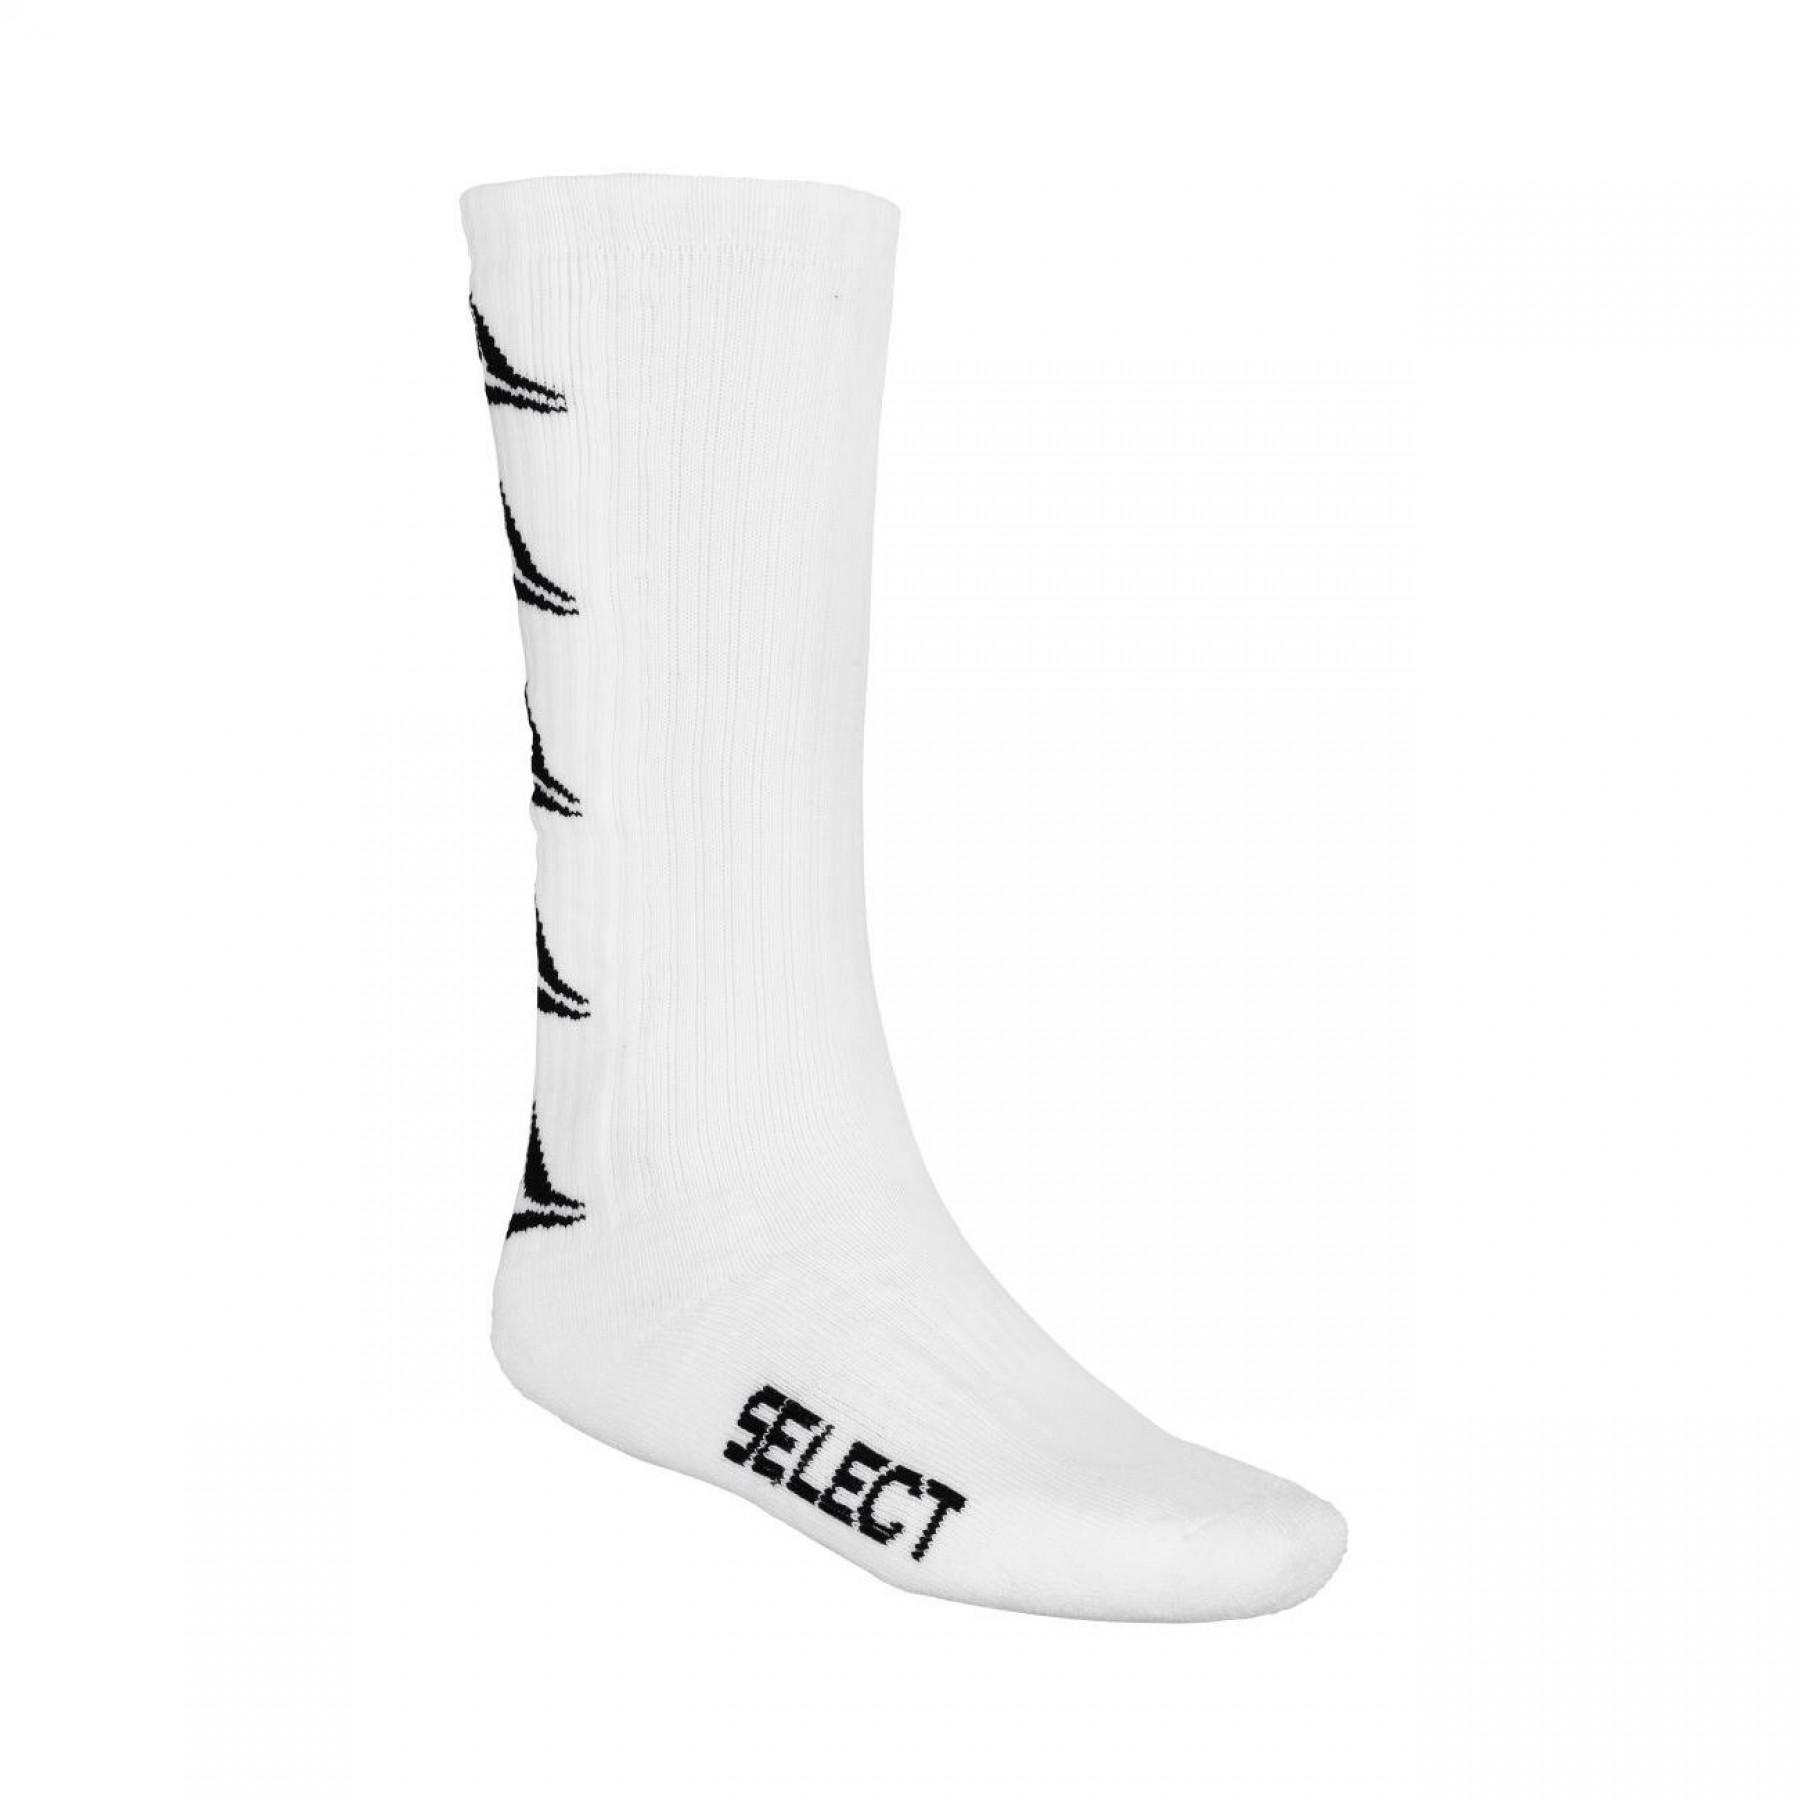 Socks Select Ultimate Sports Long